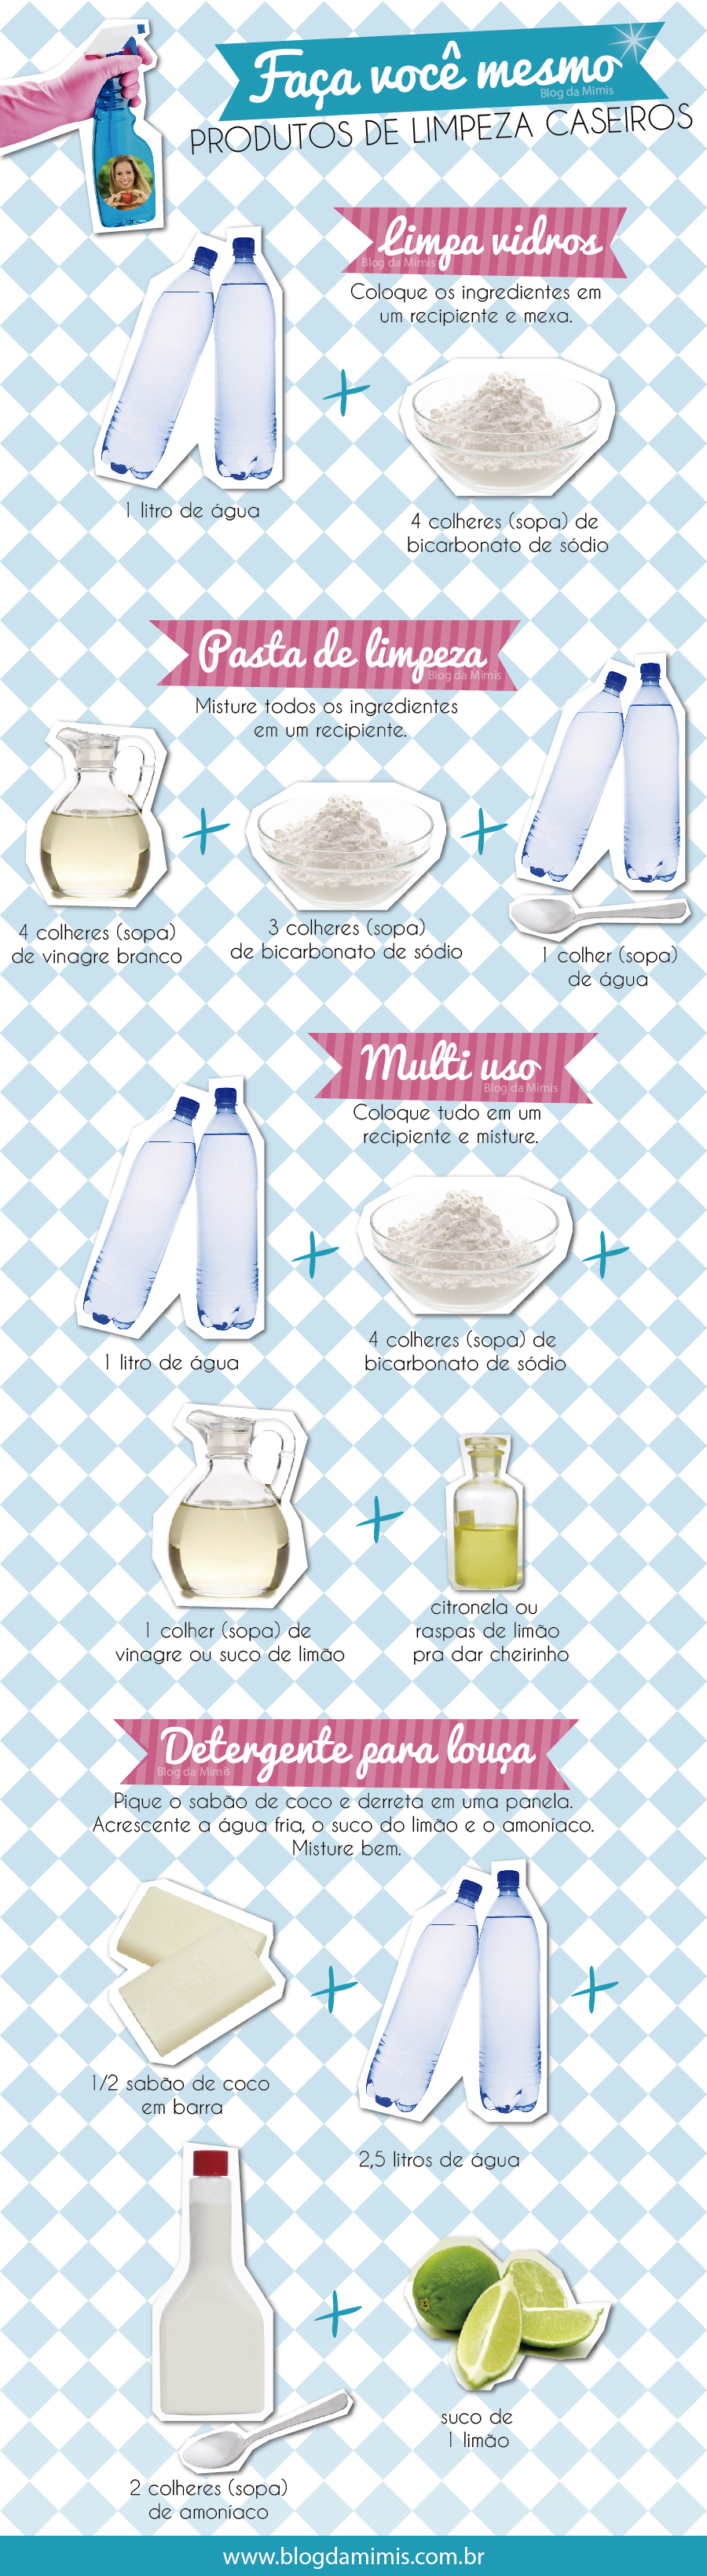 produtos-limpeza-caseiros-blog-da-mimis-michelle-franzoni-01